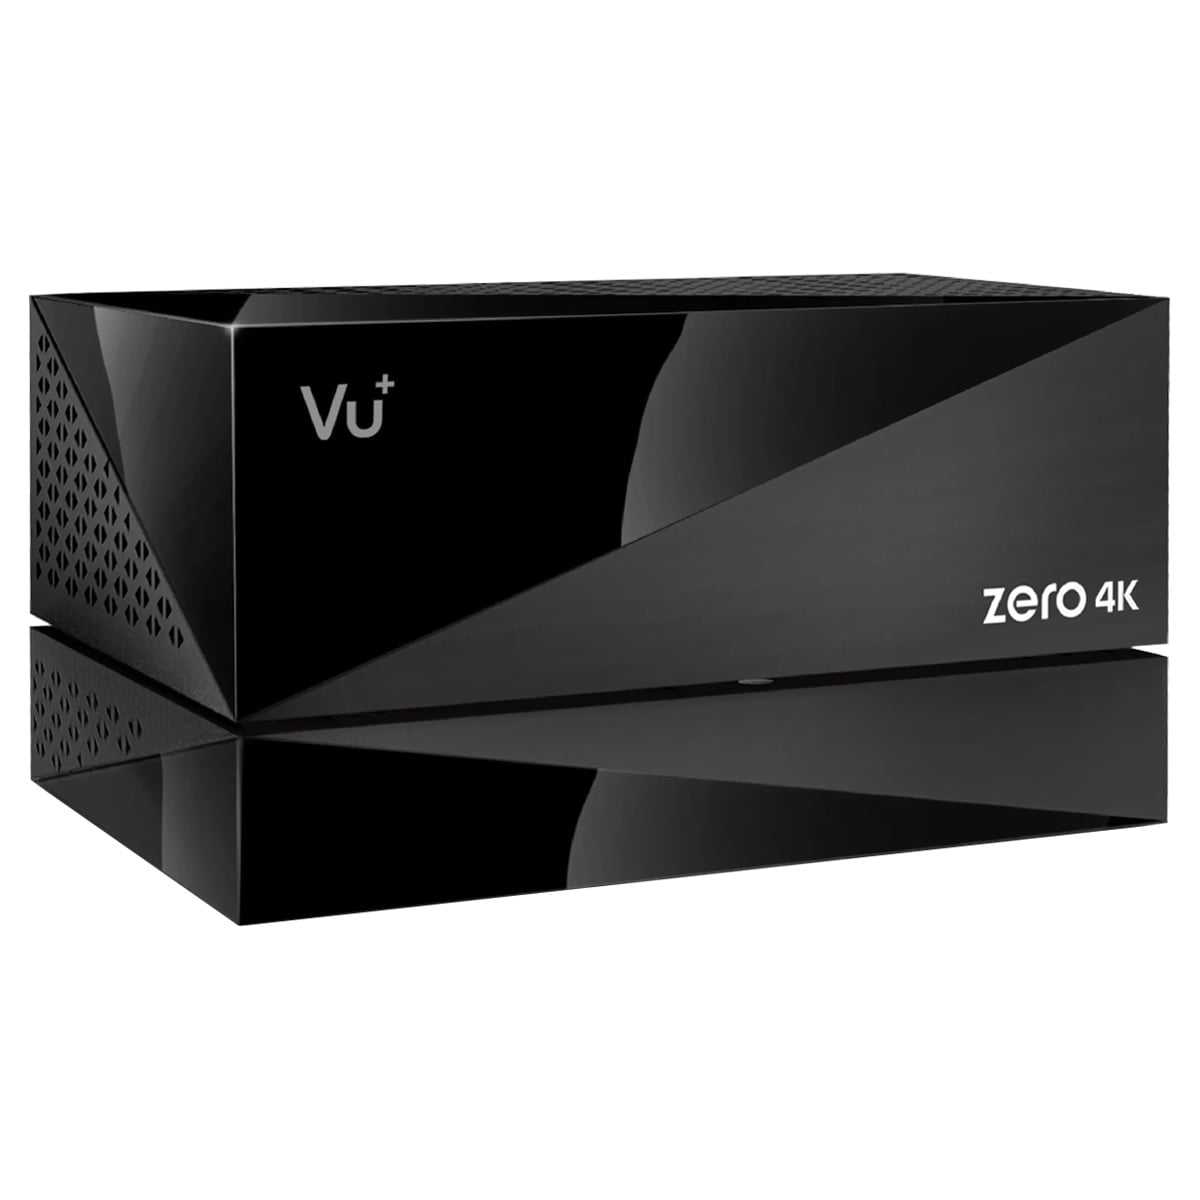 VU+ Plus Zero 4K DVB-S2X MS Sat Receiver inkl. PVR-Kit (UHD Linux HbbTV LAN) 2TB von VU+